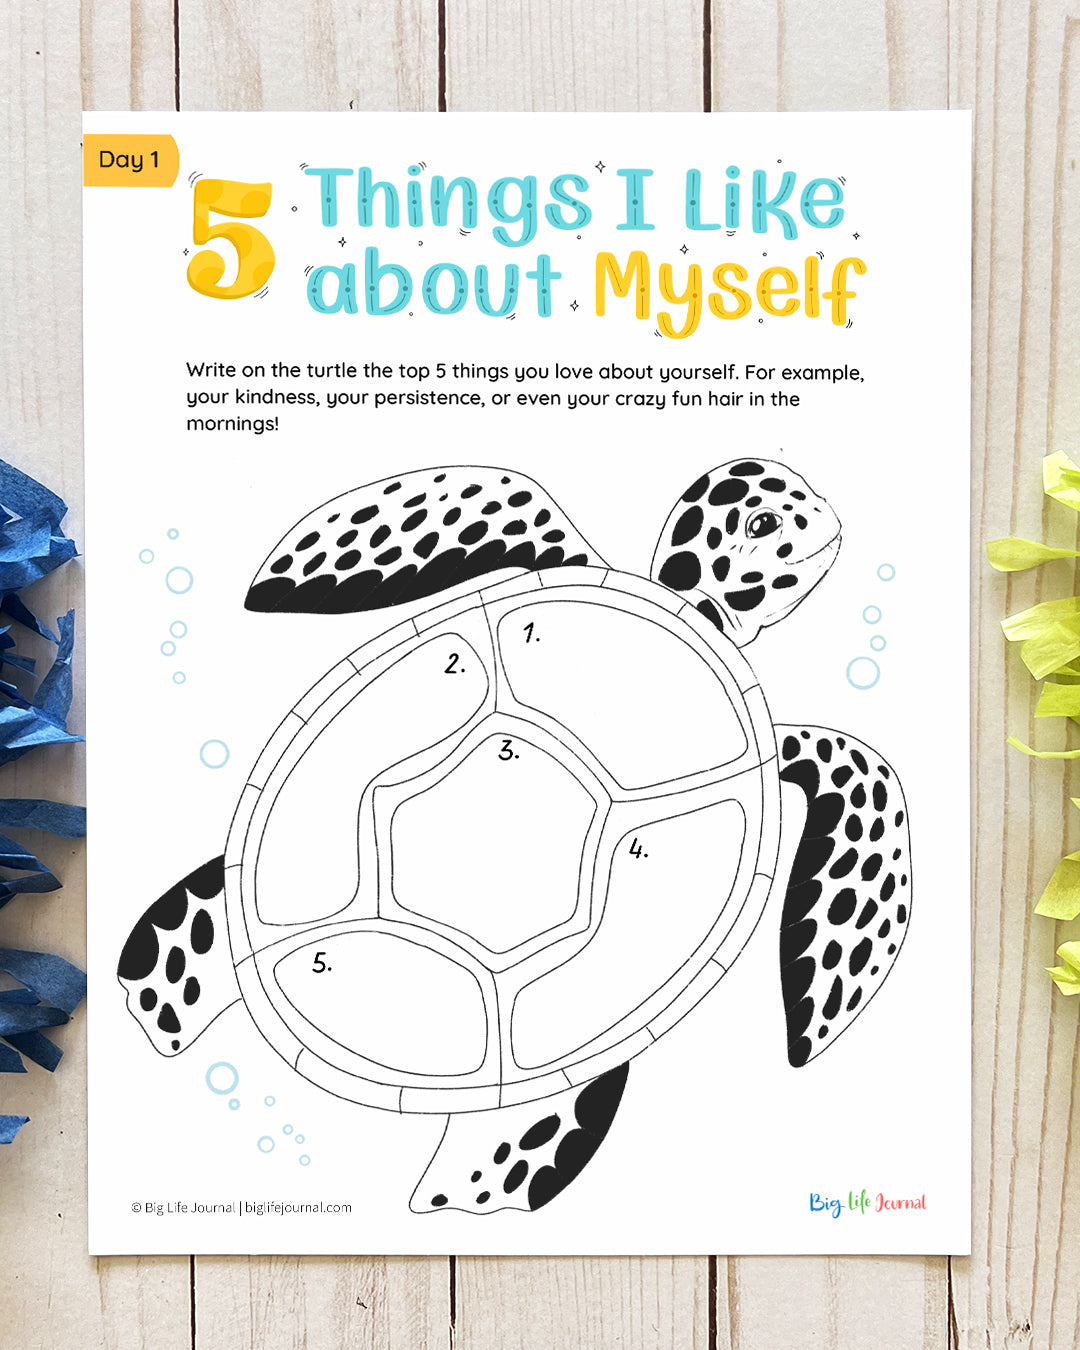 Gratitude Kit PDF (ages 5-12) – Big Life Journal